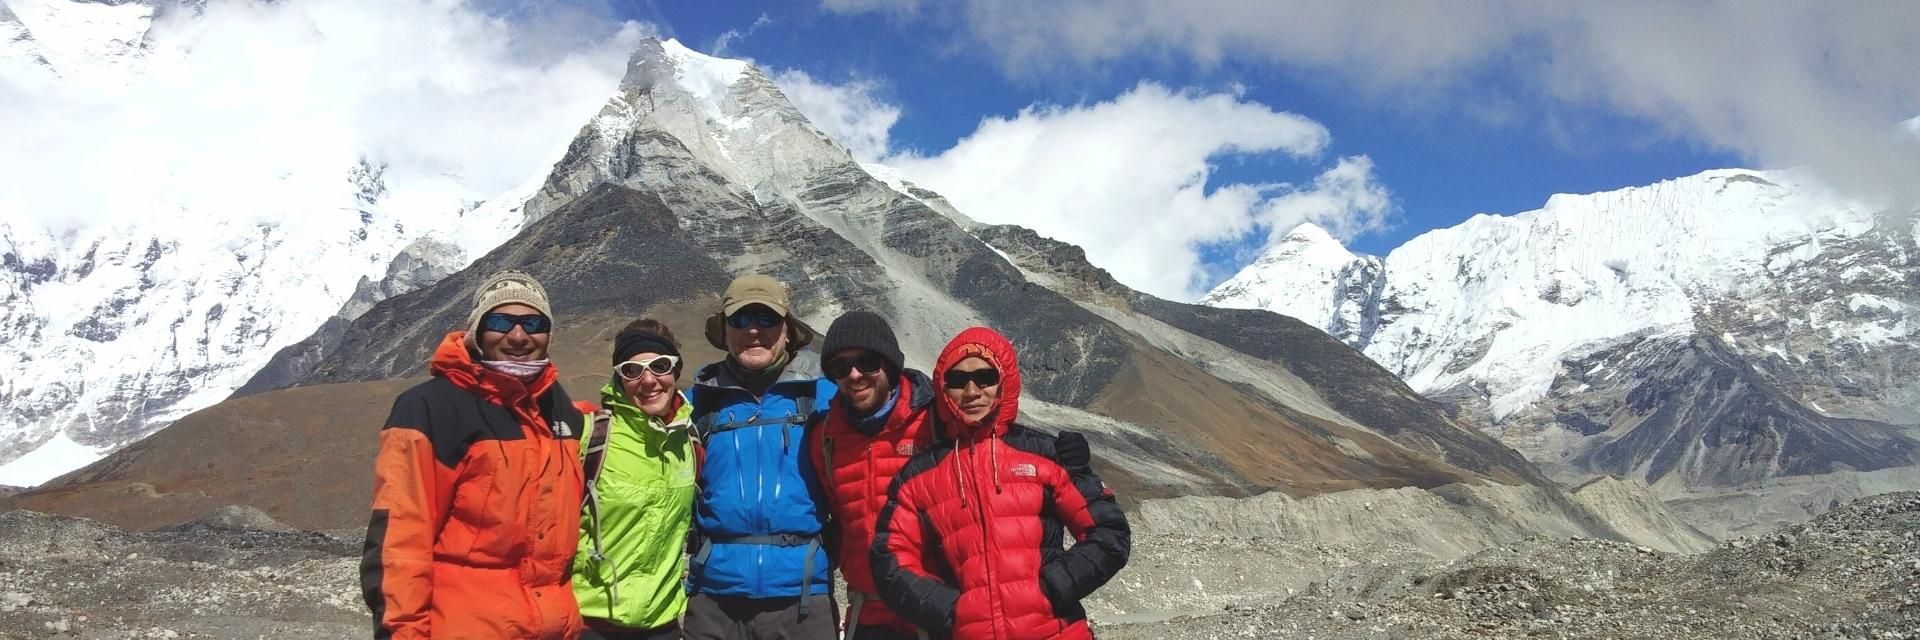 Island Peak Climb and Everest Three Passes Trek